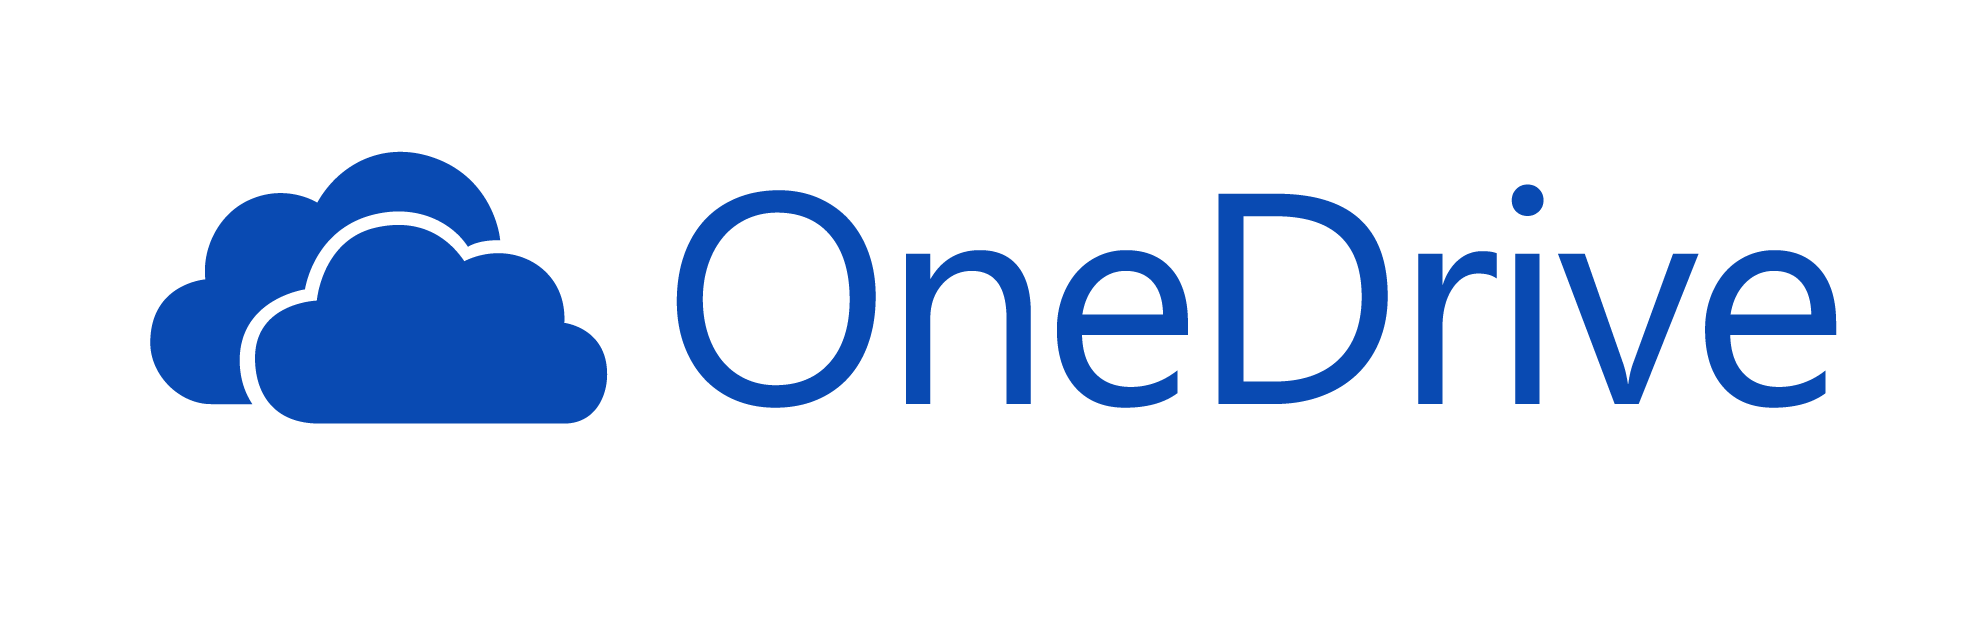 Drive One Logo Microsoft